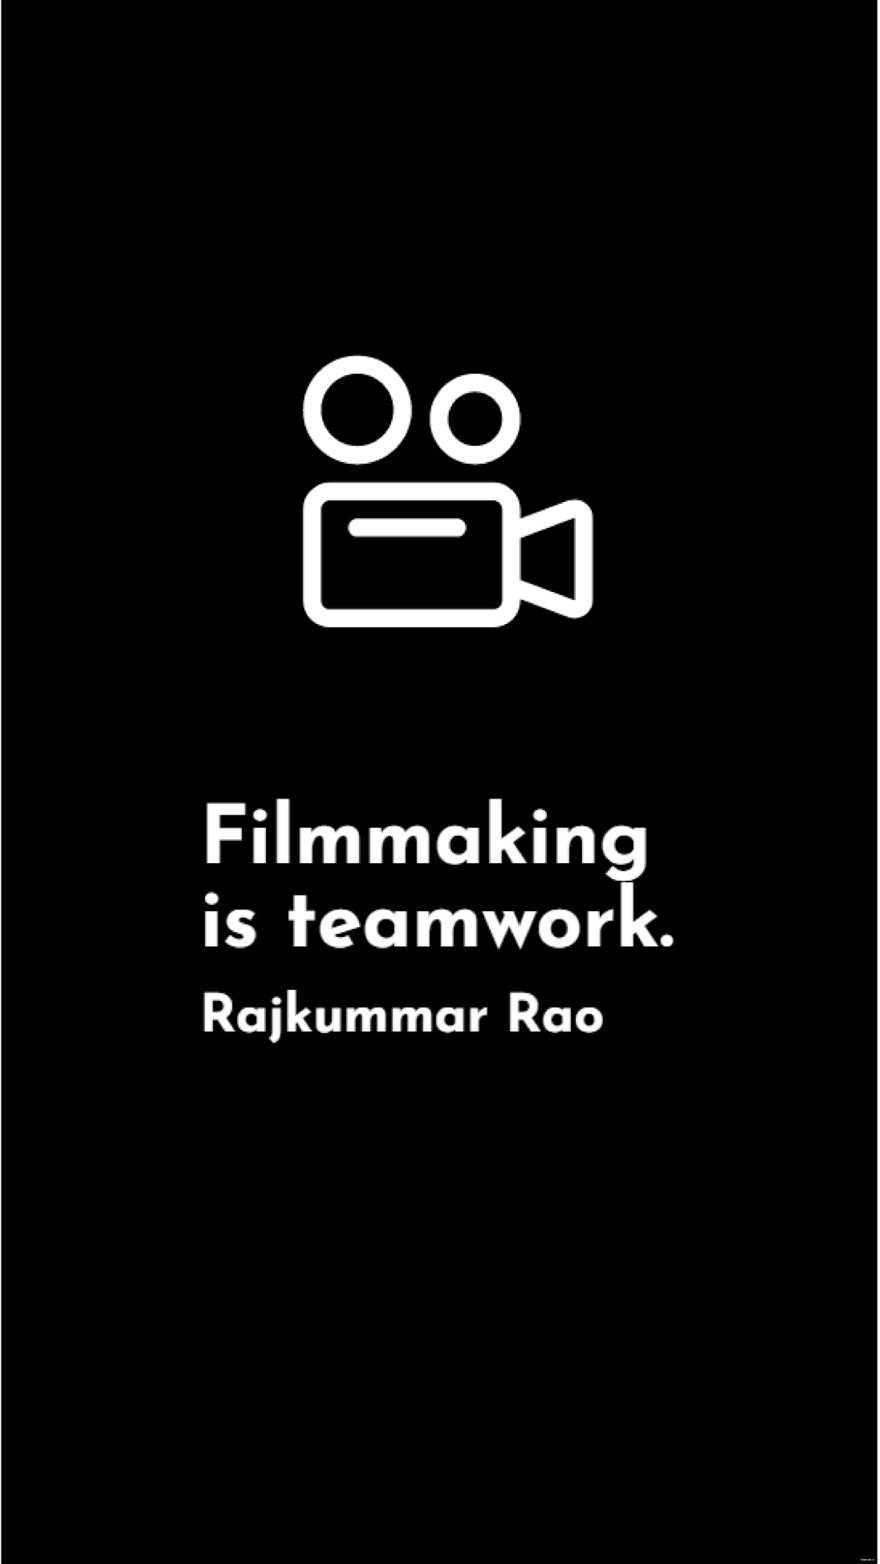 Free Rajkummar Rao - Filmmaking is teamwork.